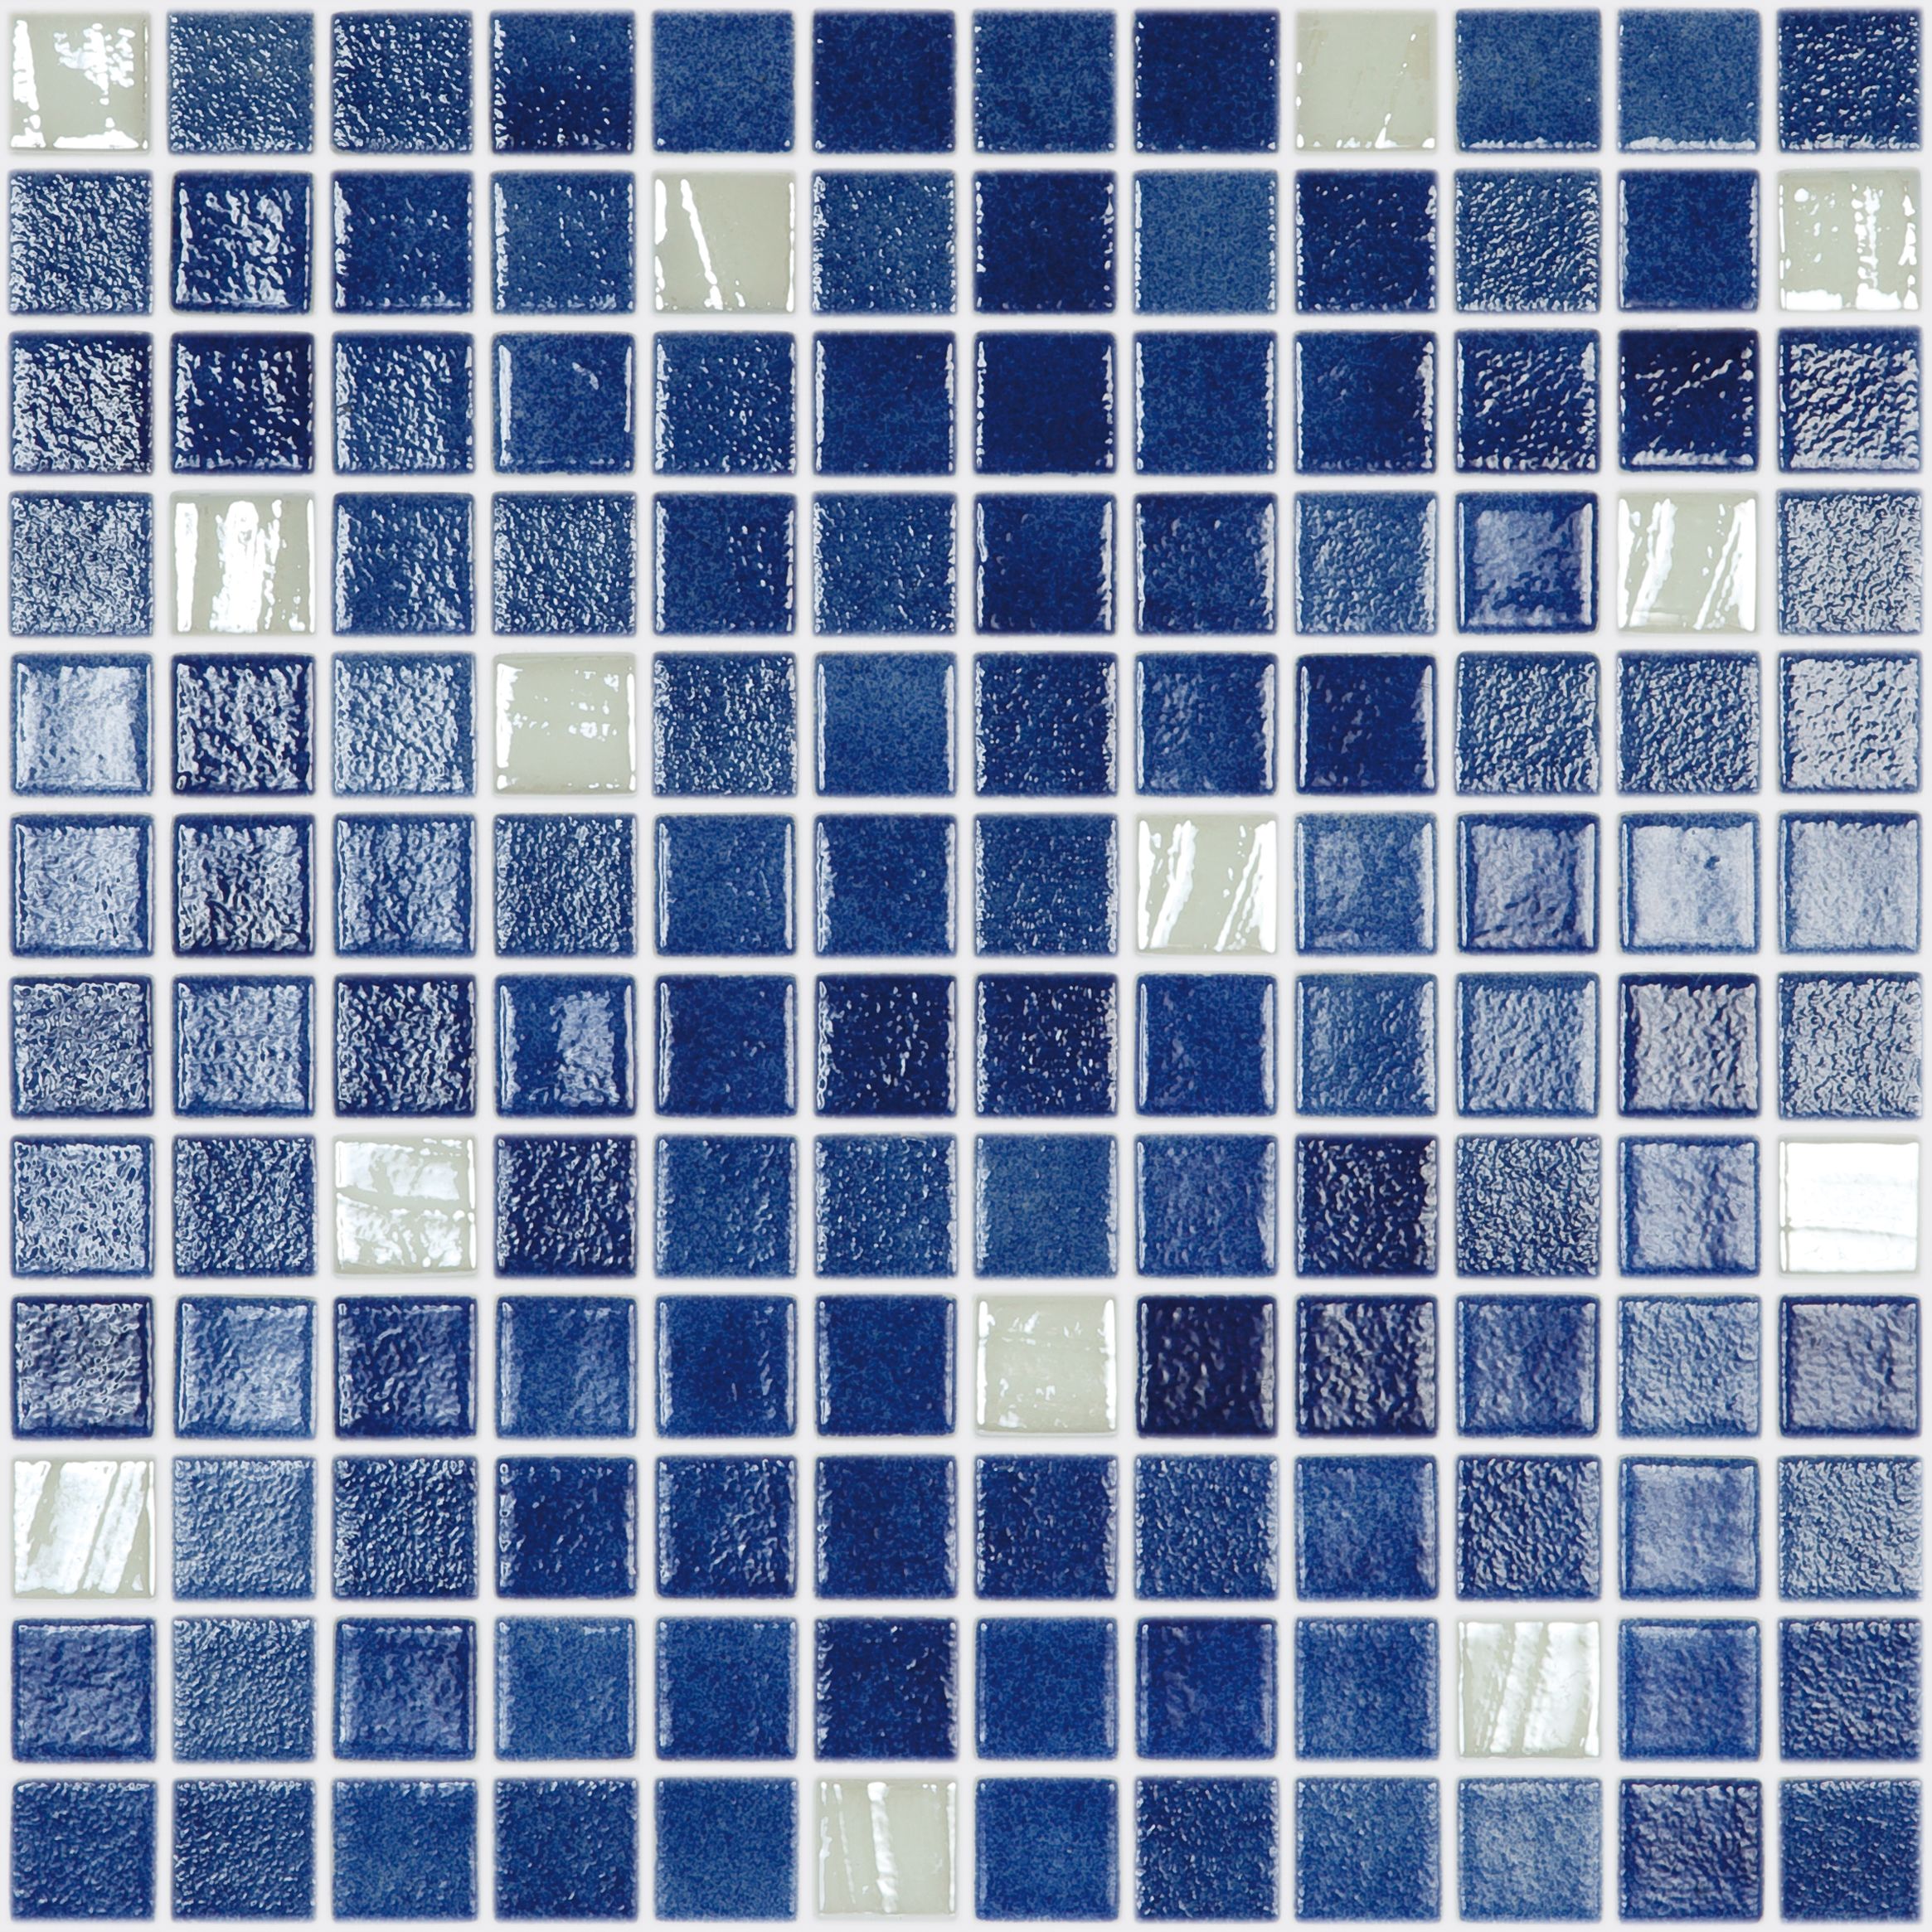 gresite pisicina mosaico vidrepur 25x25mm pool mosaics